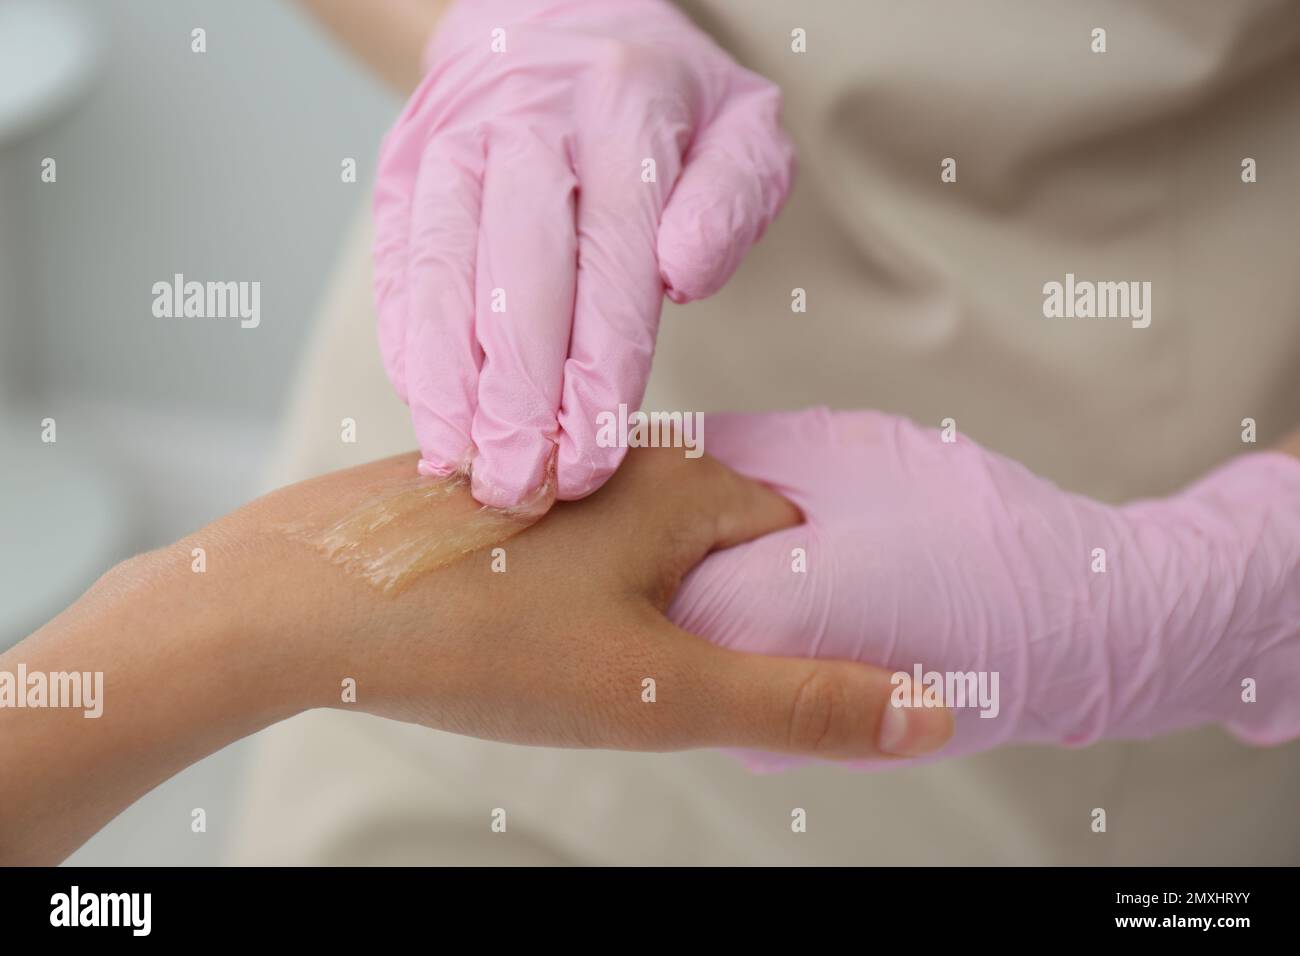 Woman getting wax epilation of hand in salon, closeup Stock Photo